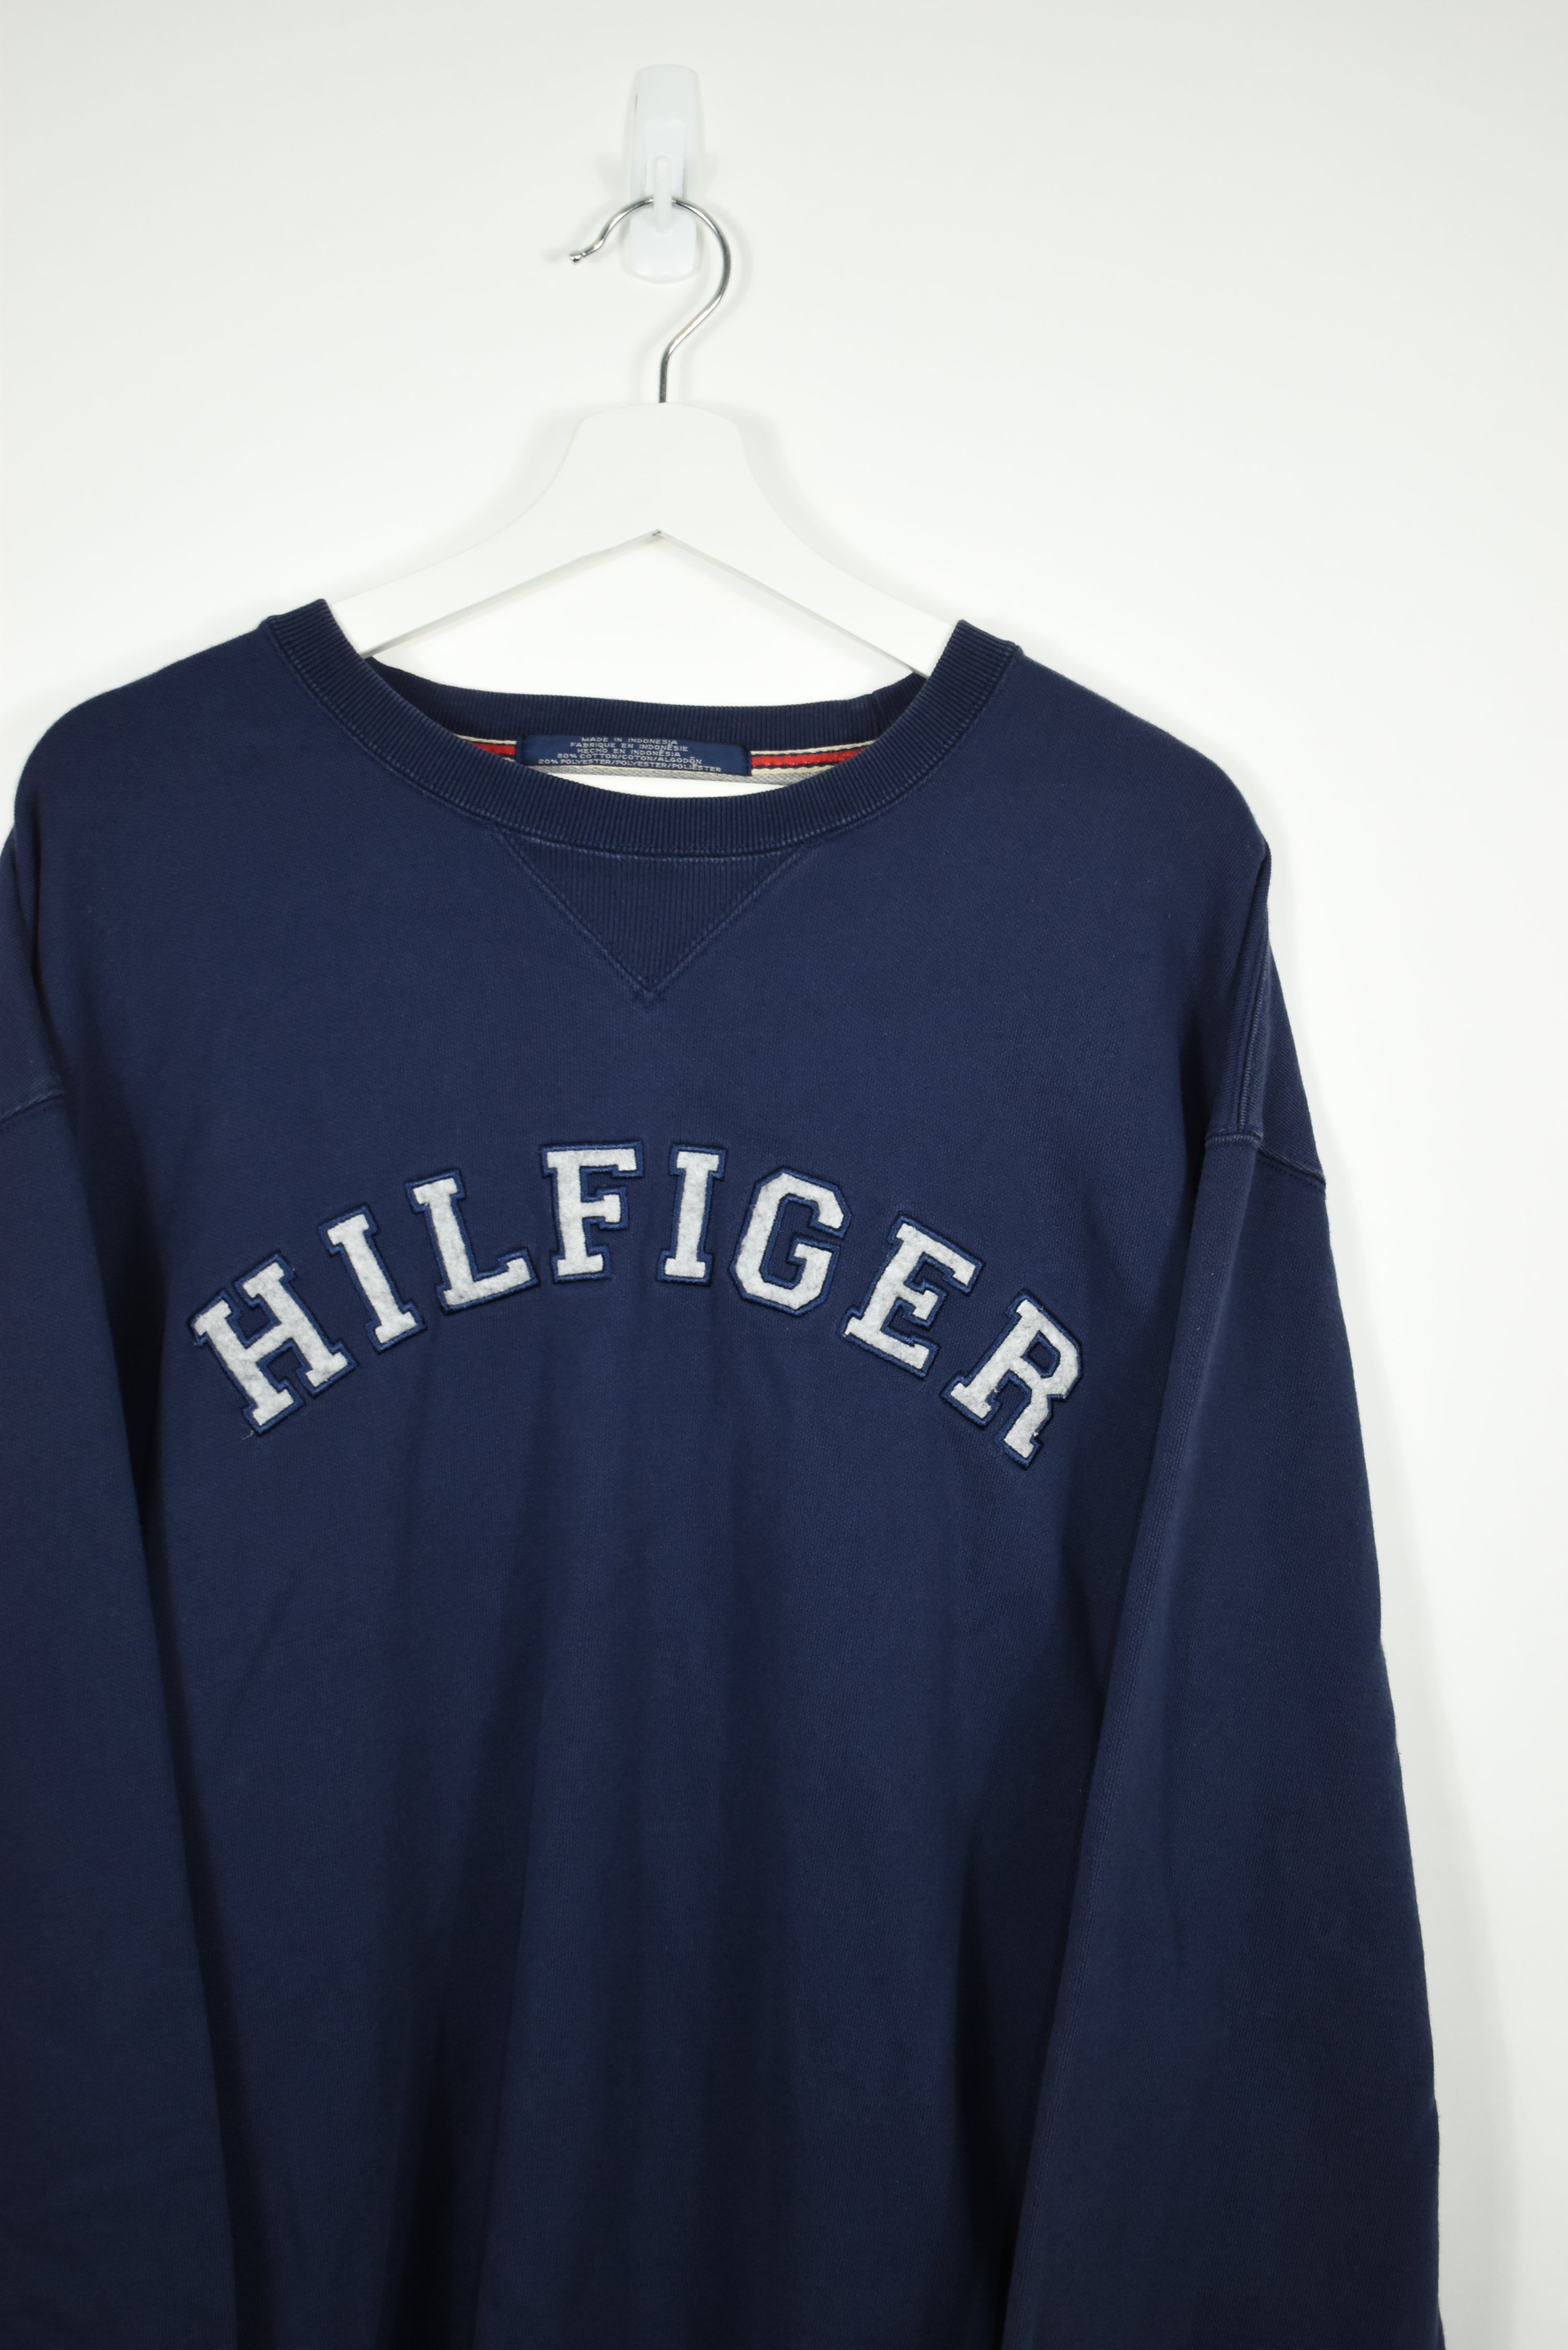 VIntage Tommy Hilfiger Spellout Embroidered Sweatshirt XLARGE